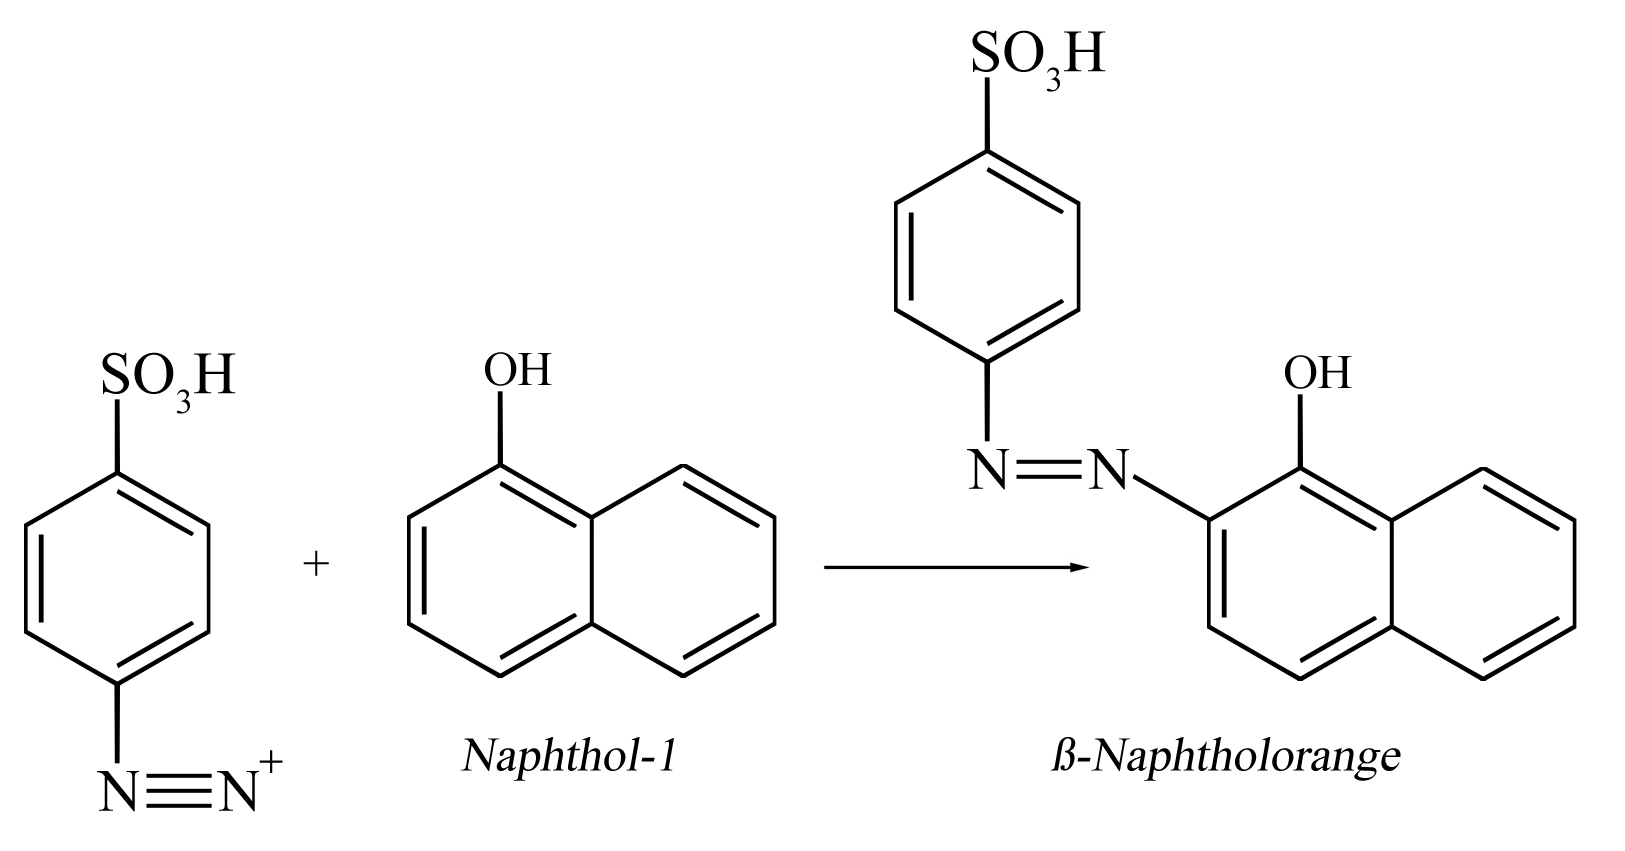 Kupplung mit Naphthol-1